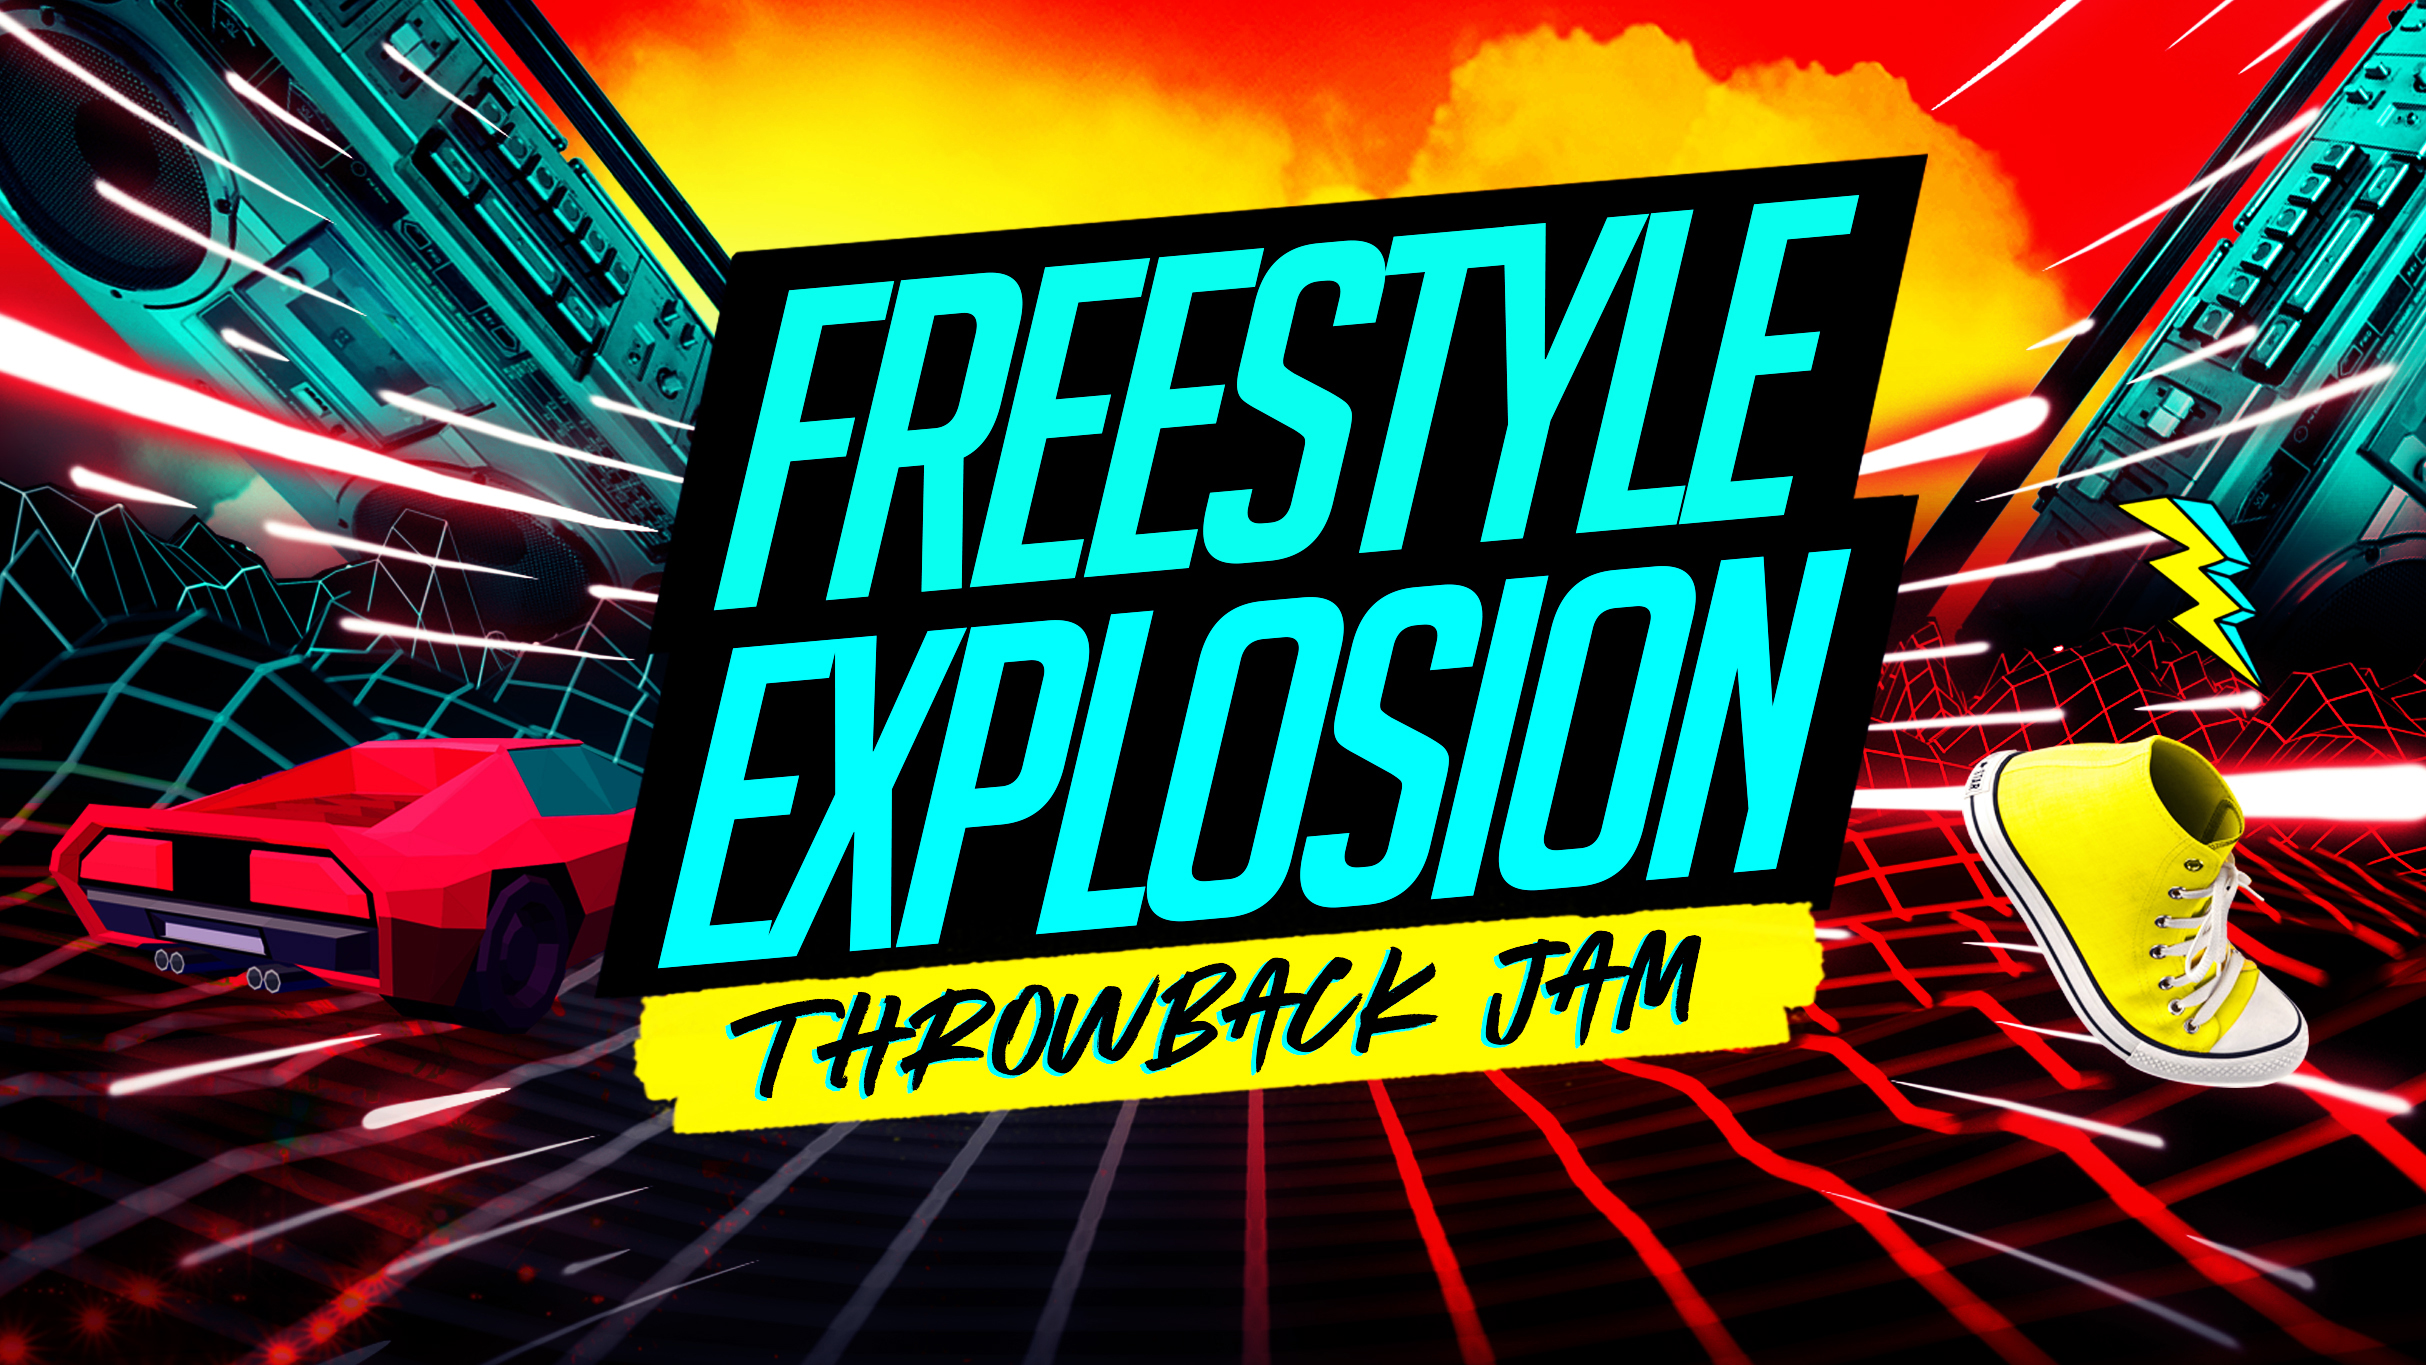 Freestyle Explosion Throwback Jam